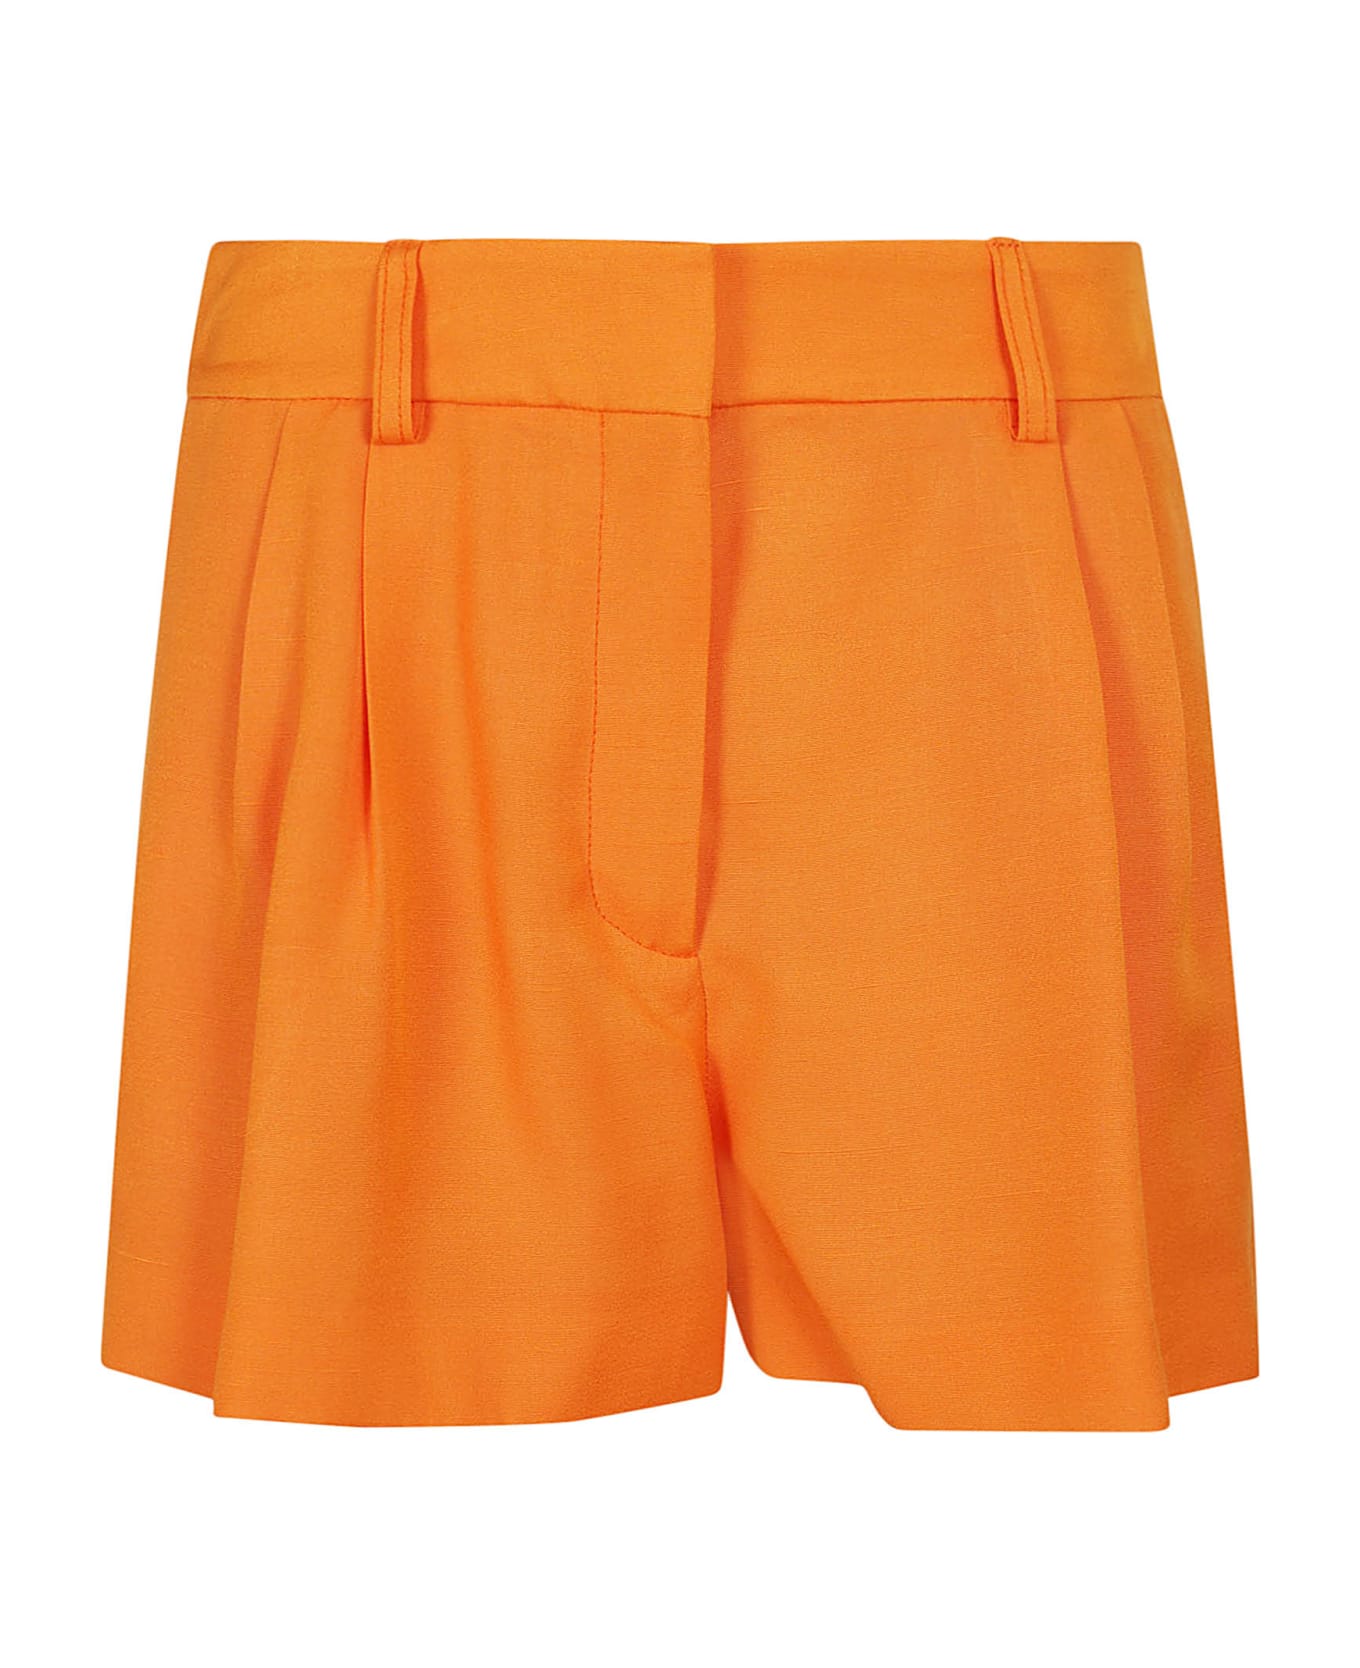 Stella McCartney Tailored Shorts - Bright Orange